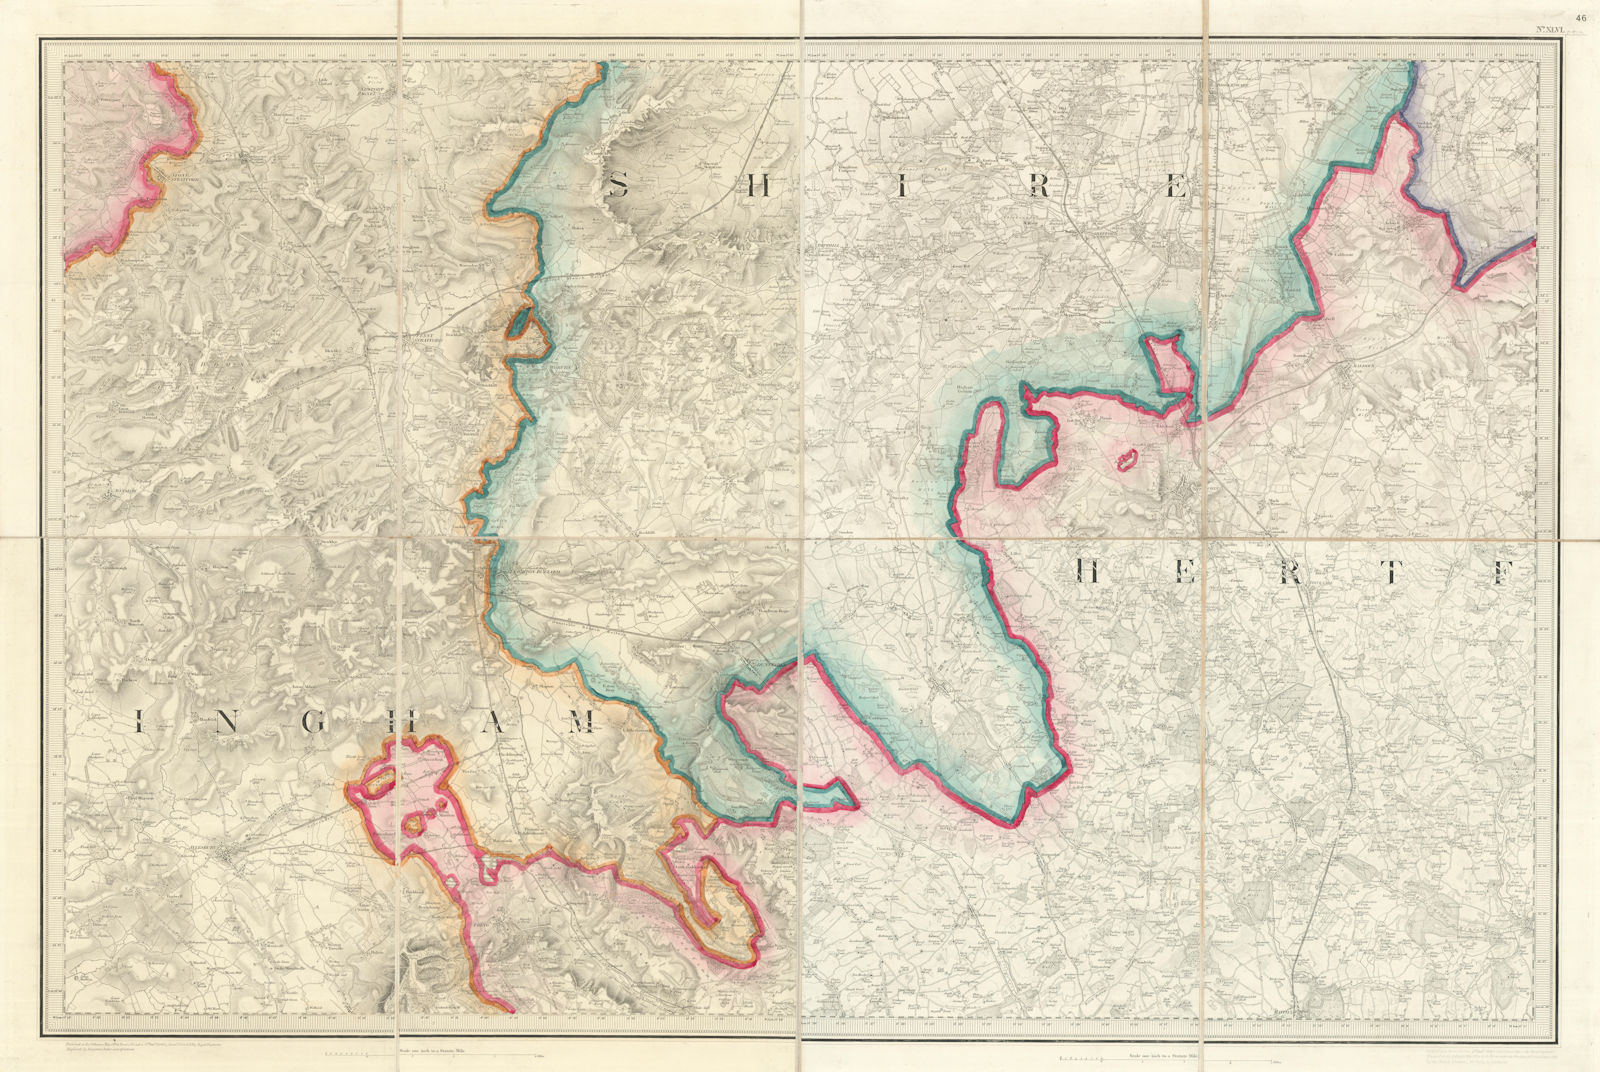 OS #46 North Chilterns. Tring Aylesbury Dunstable Luton Hatfield Woburn 1834 map